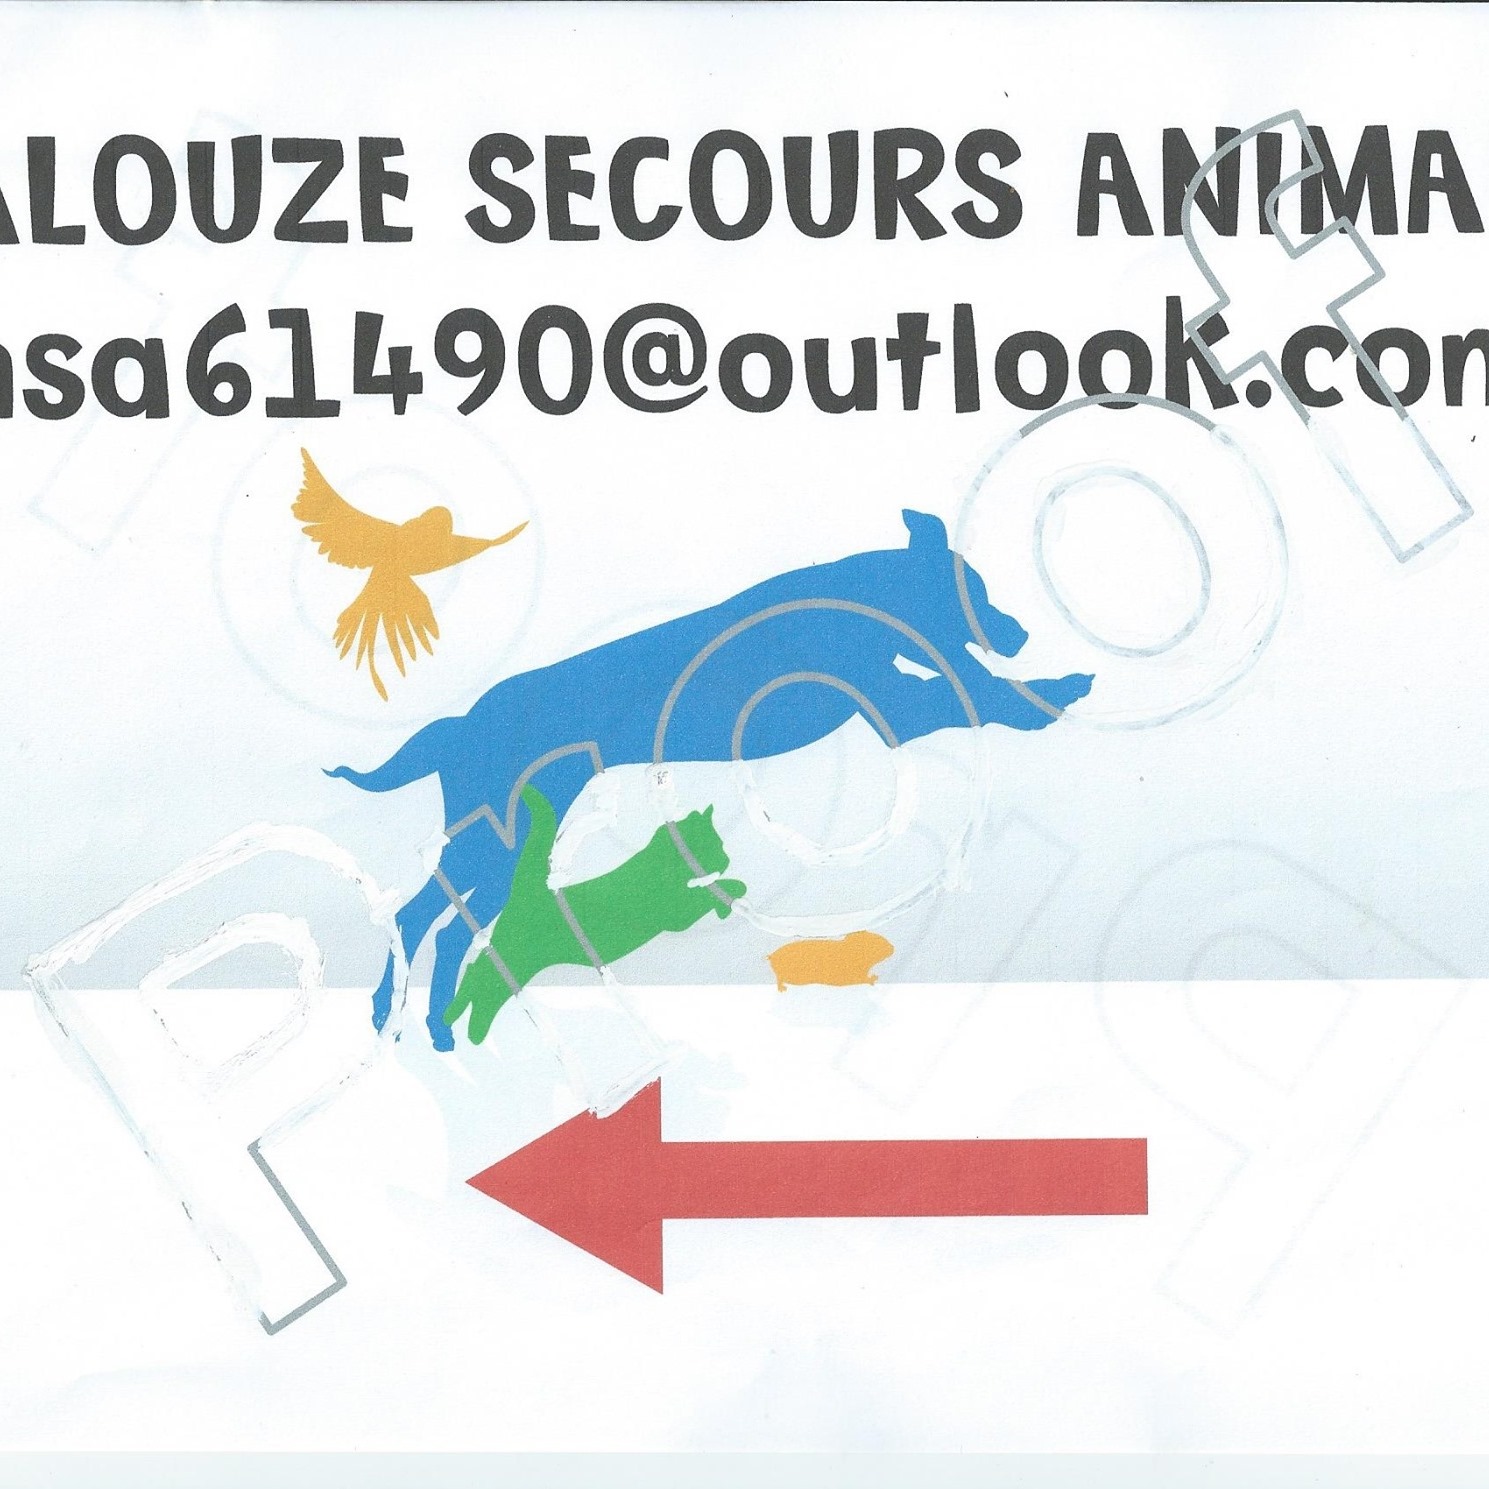 Halouze Secours Animal